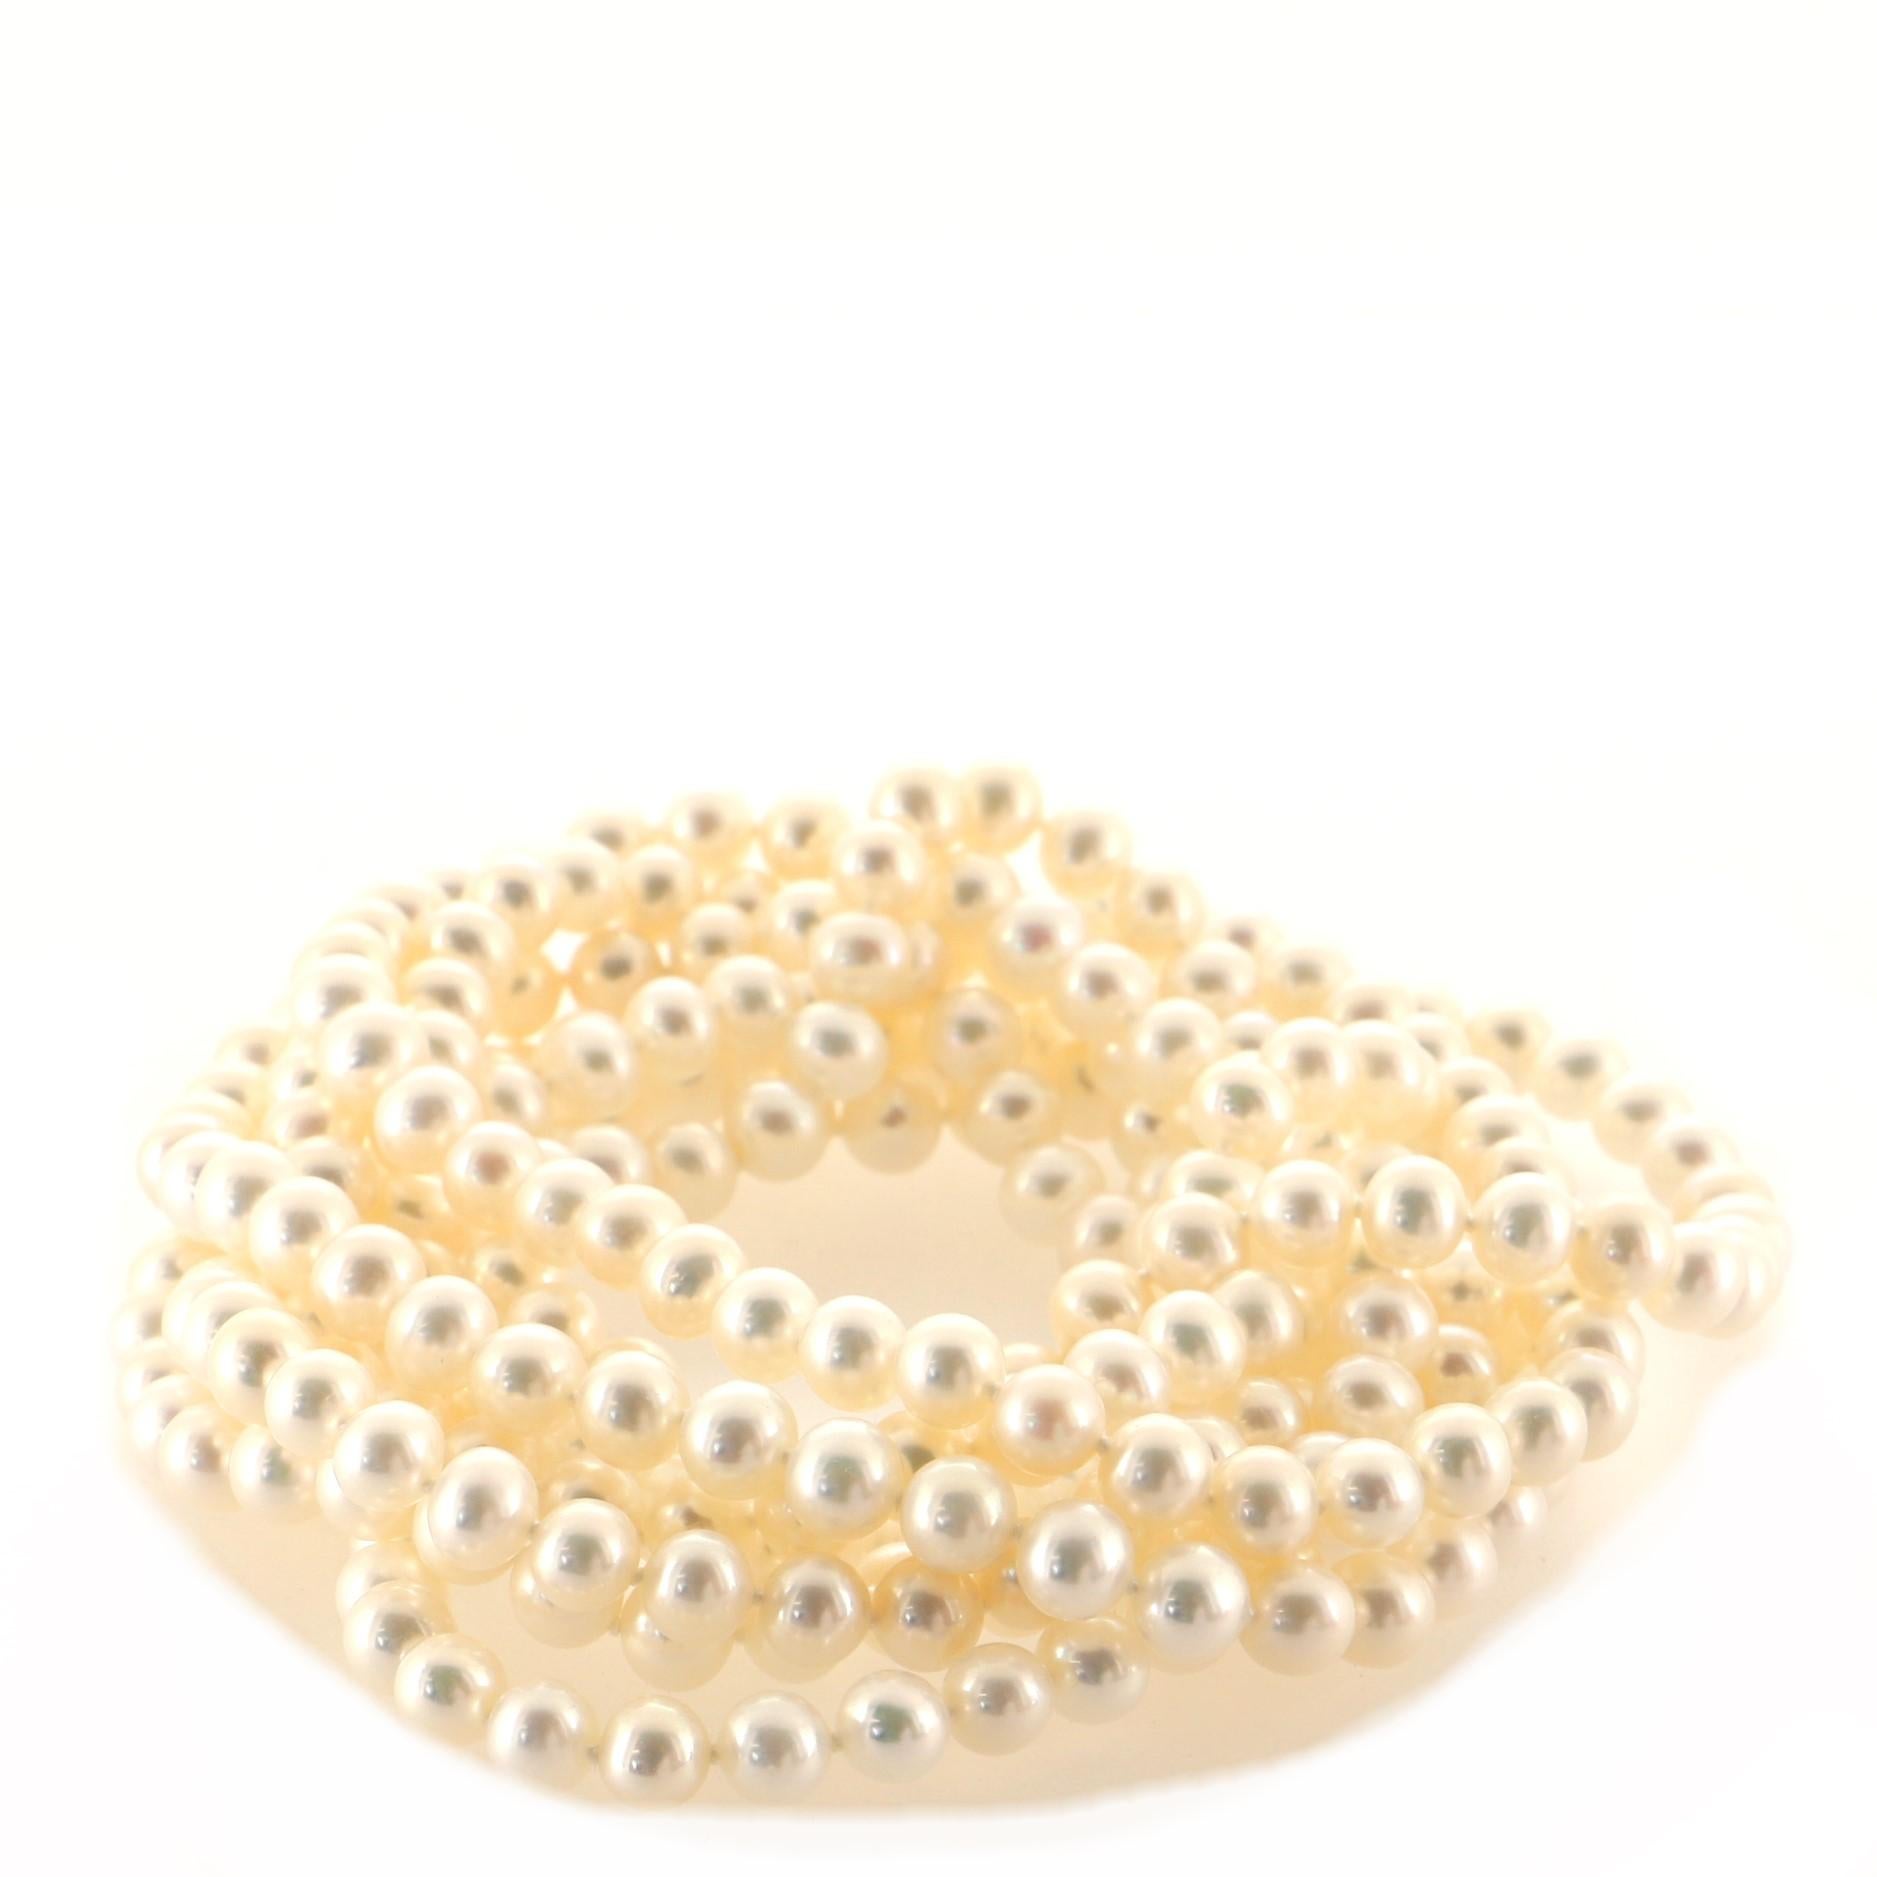 tiffany ziegfeld pearl necklace